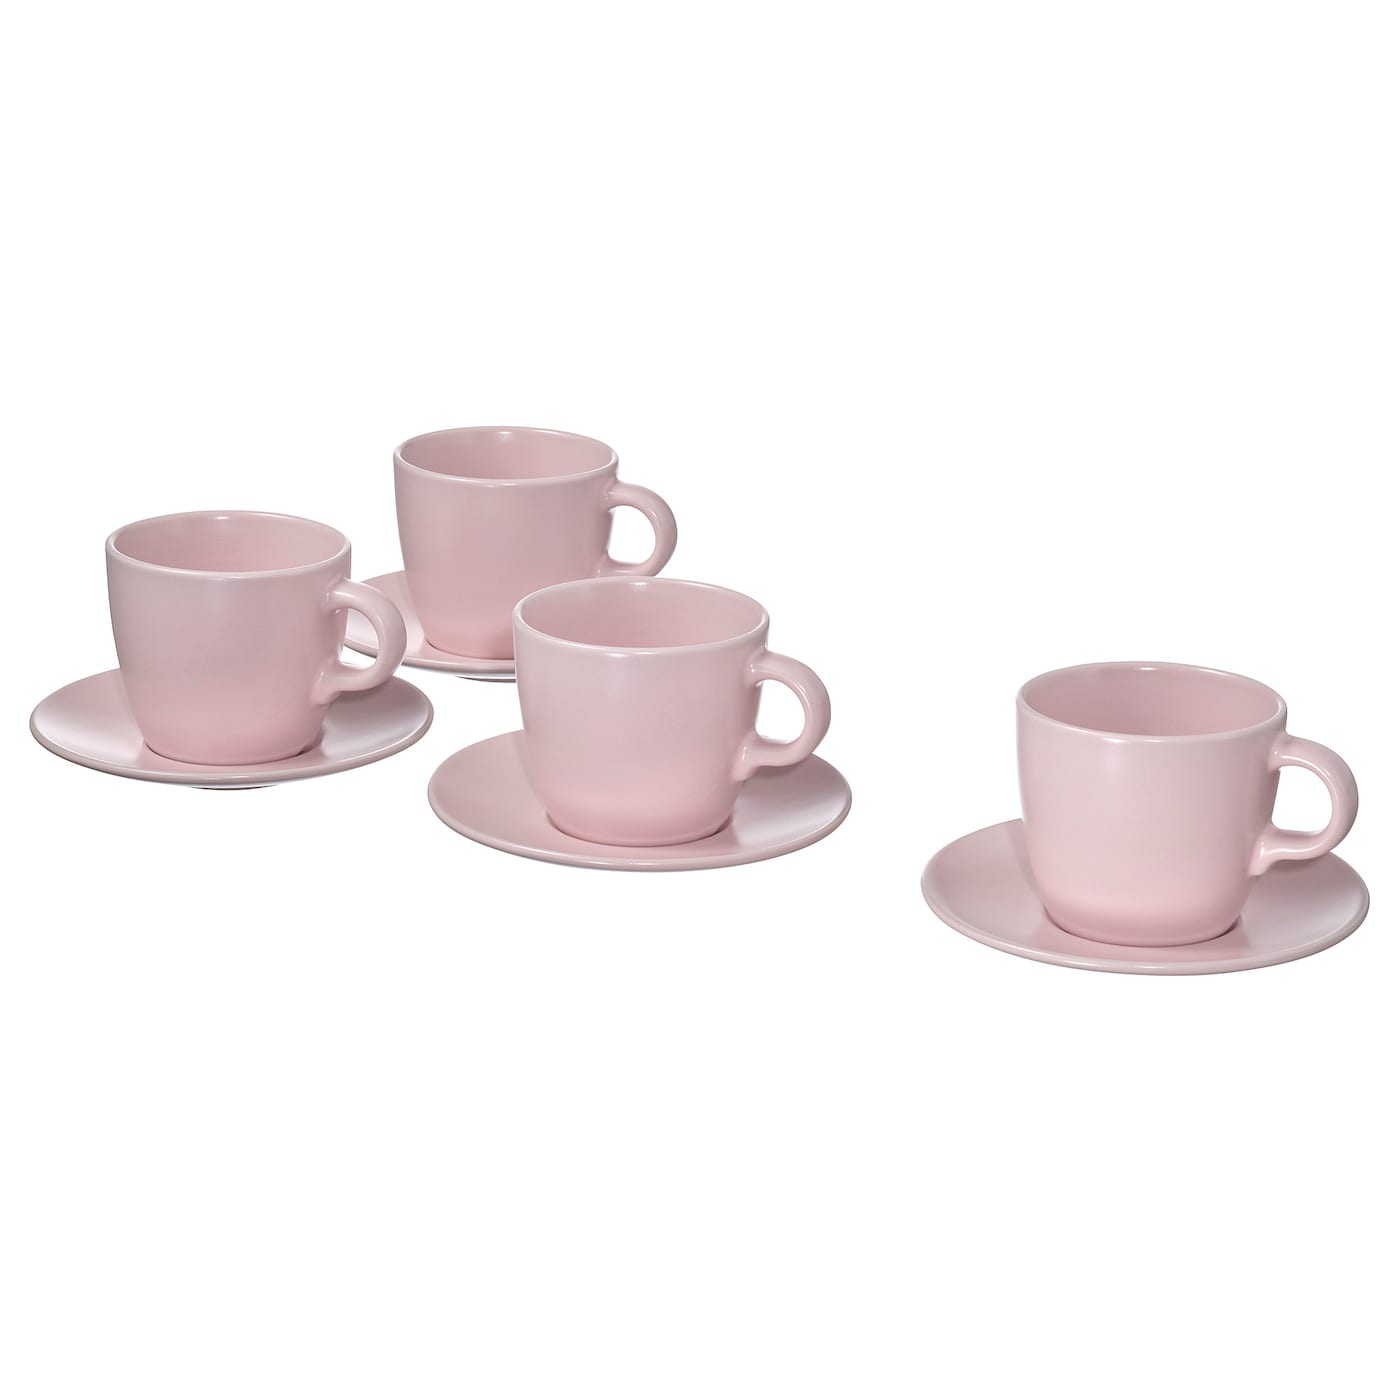 Чайный набор, 4 шт. - IKEA FÄRGKLAR/FARGKLAR, 250 мл, розовый, ФЭРГКЛАР ИКЕА